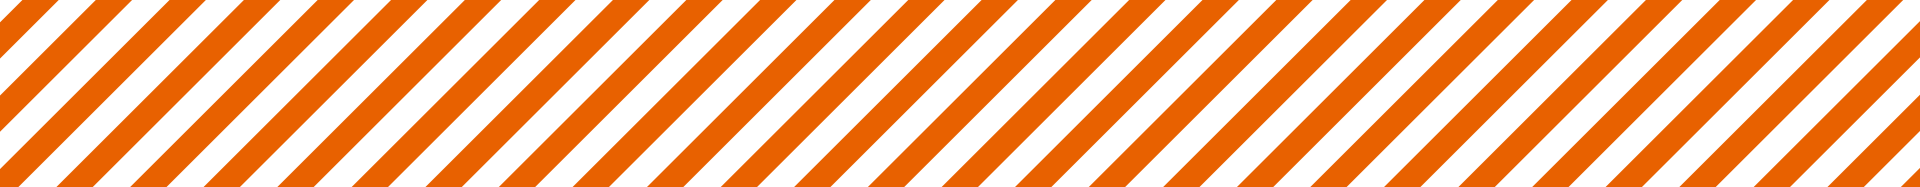 Orange Diagonal Lines